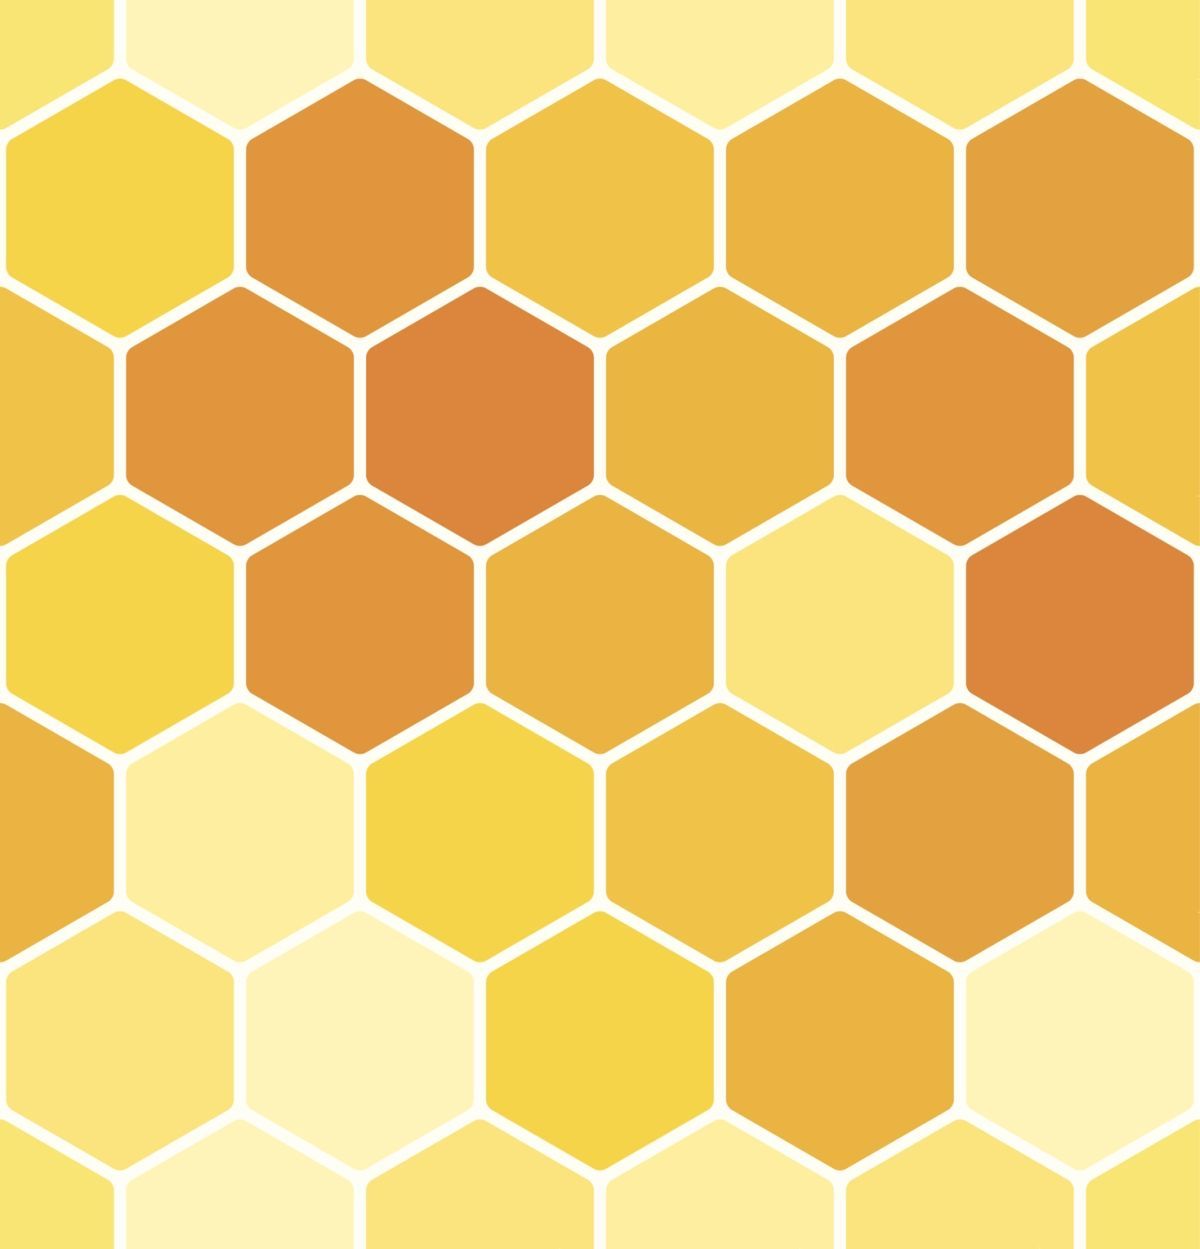 Пчелиные соты паттерн